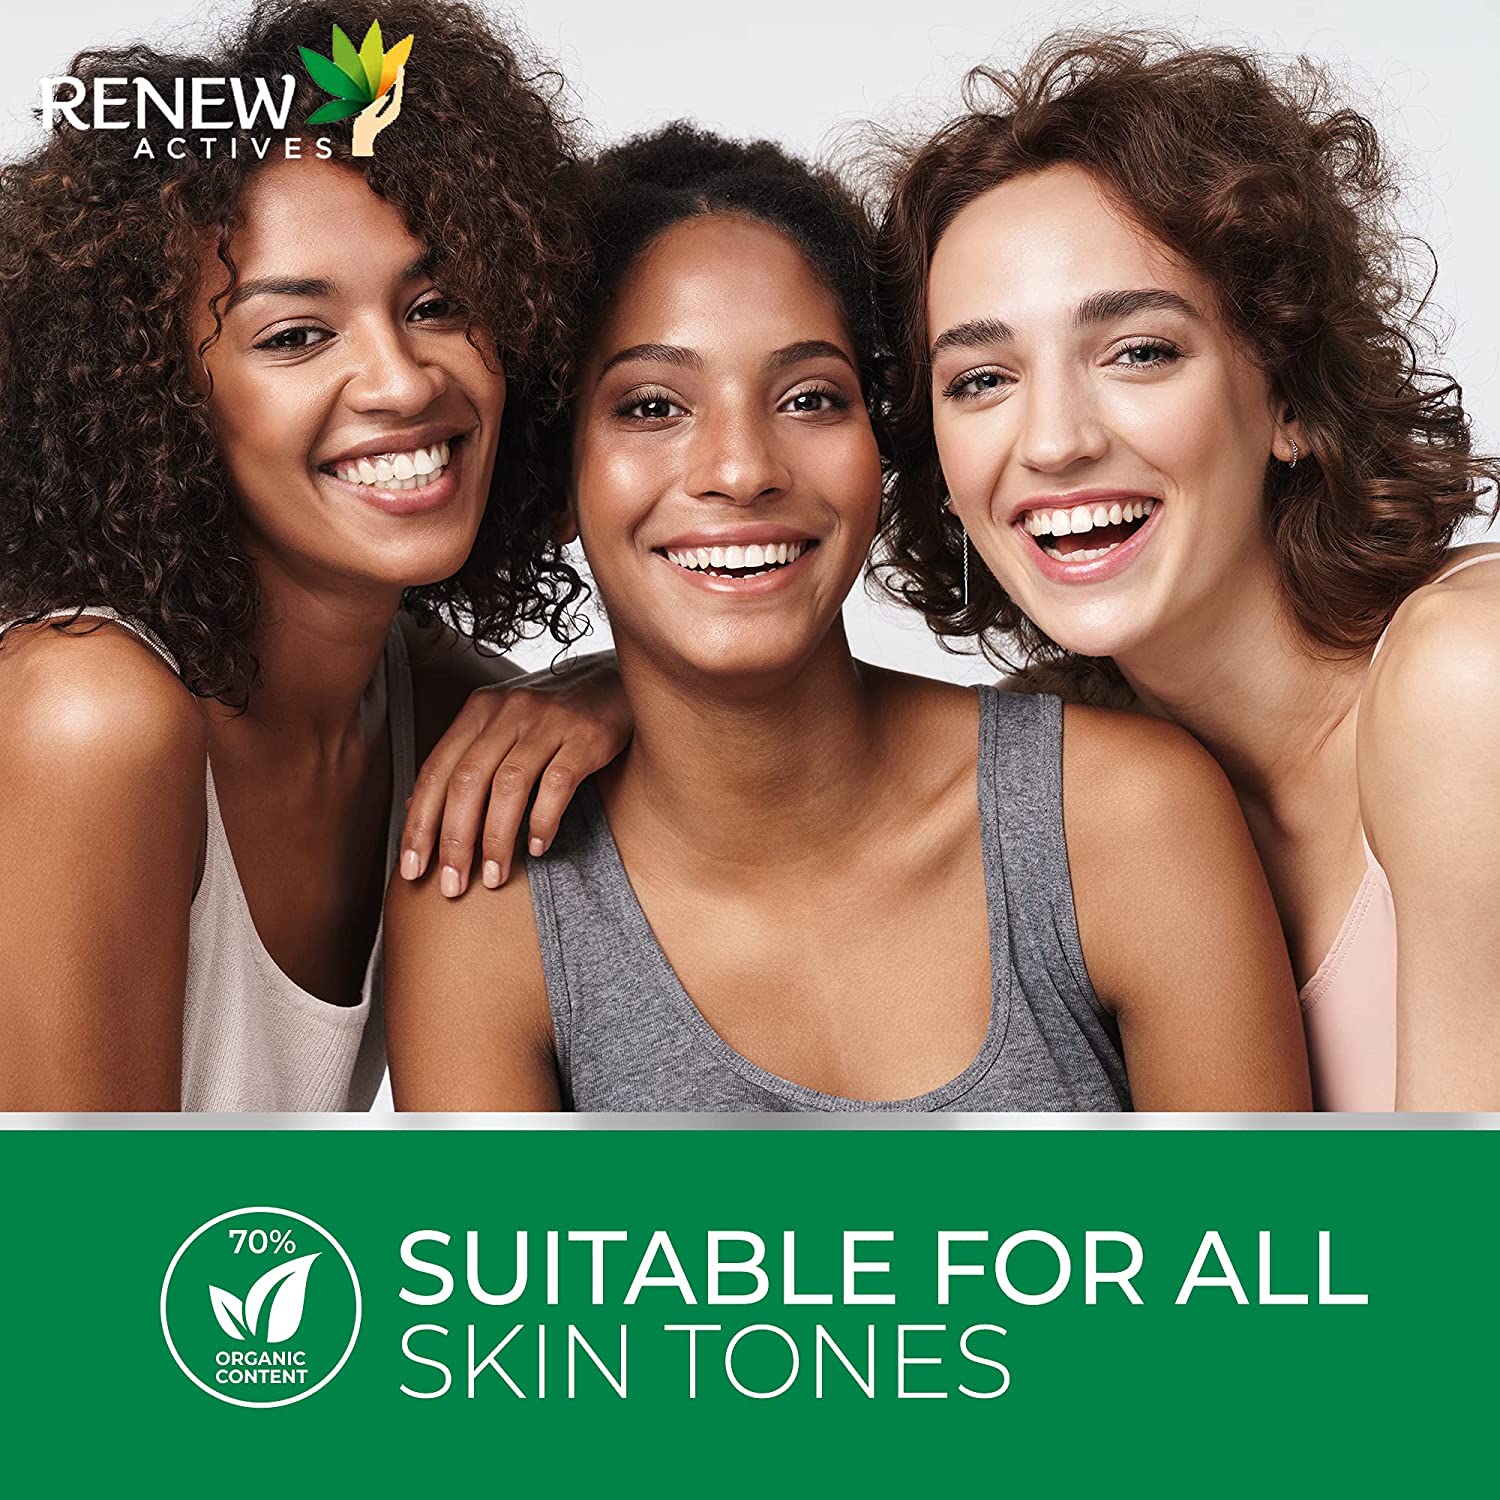 Renew Actives Tea Tree Essential Oil – 55ml Oz - Ideal for Skin Use, Warm Bath, Diffuser, Massage, Inhalations